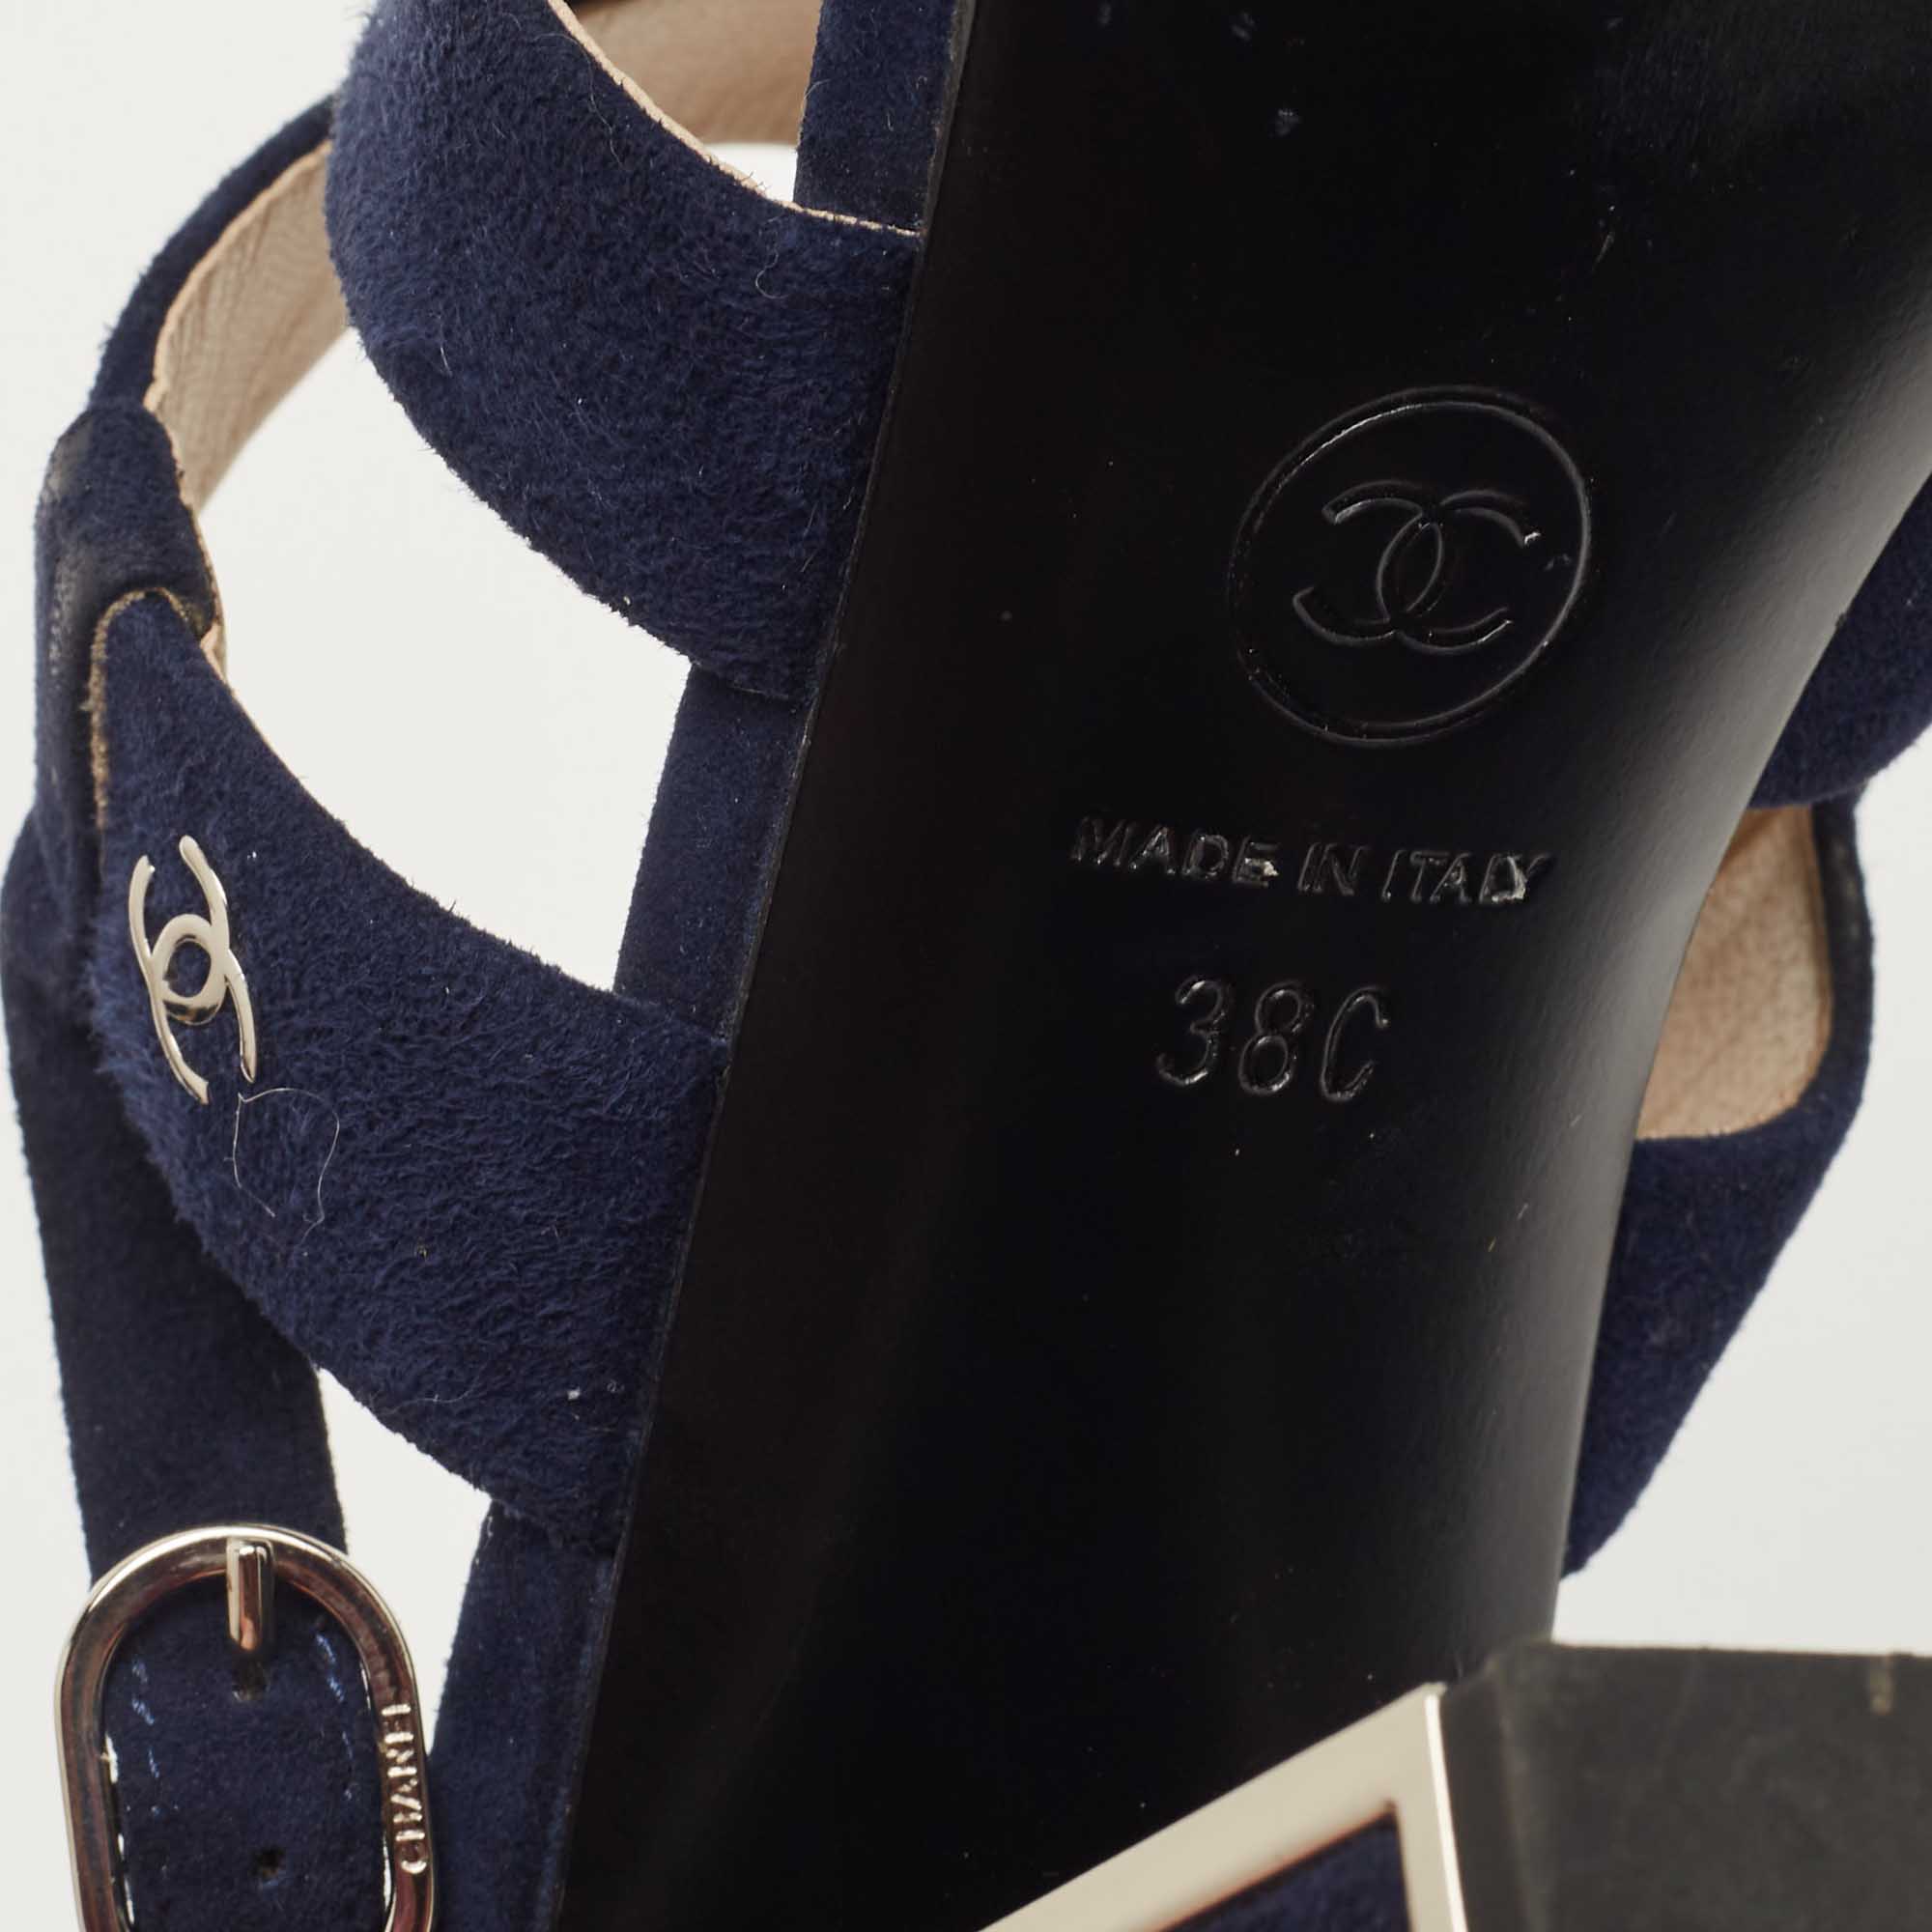 Chanel Navy Blue Suede Block Heel Ankle Strap Sandals Size 38